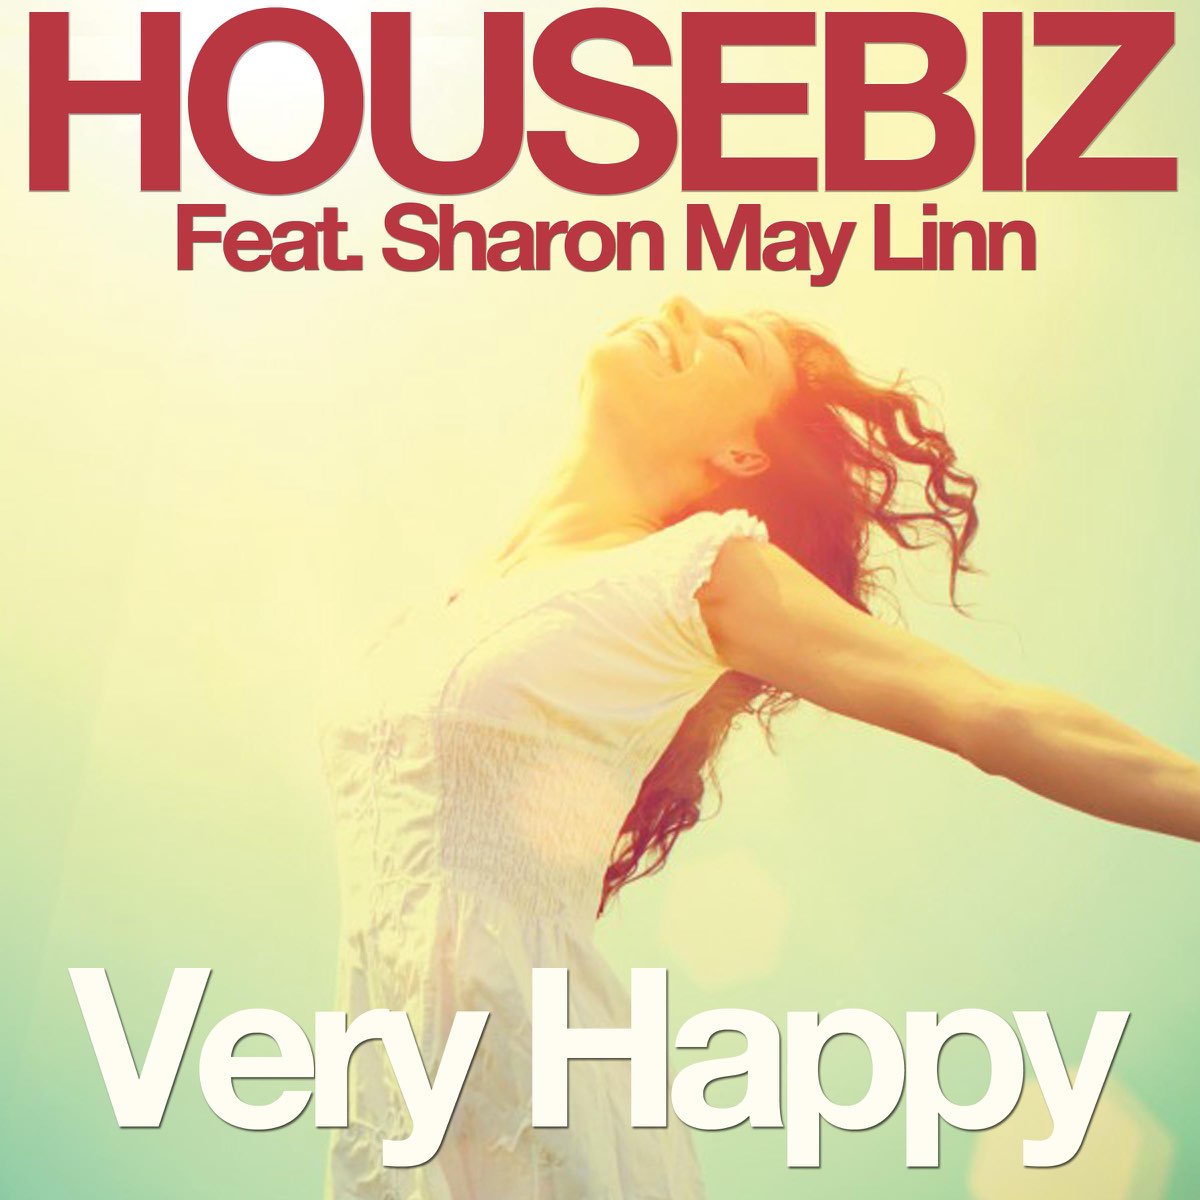 Sharon May Linn. May Linn. May Lin. Very Happy. Be happy remix